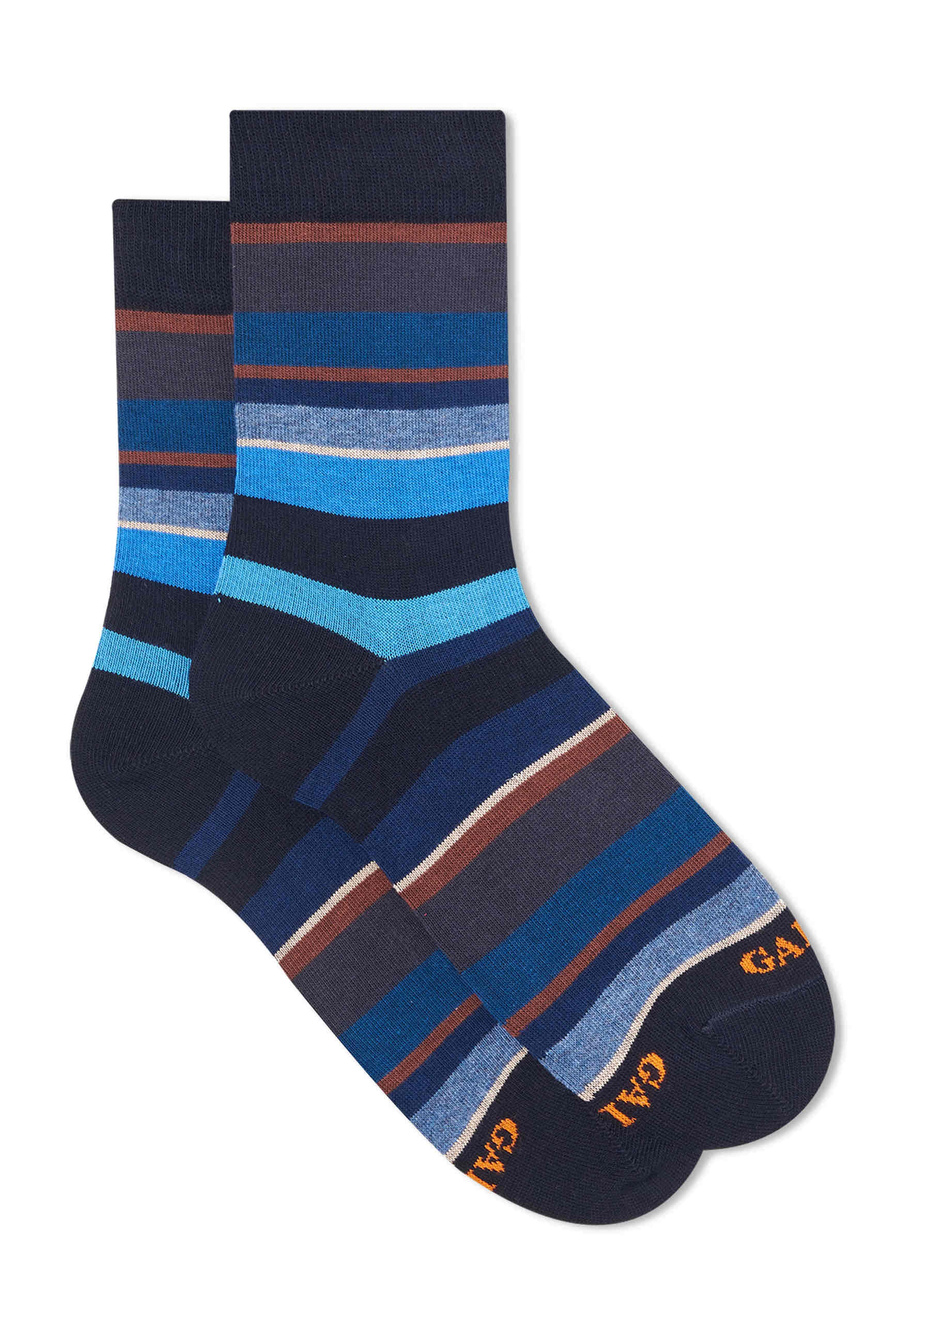 Calze corte bambino cotone blu/sabbia righe multicolor - Gallo 1927 - Official Online Shop